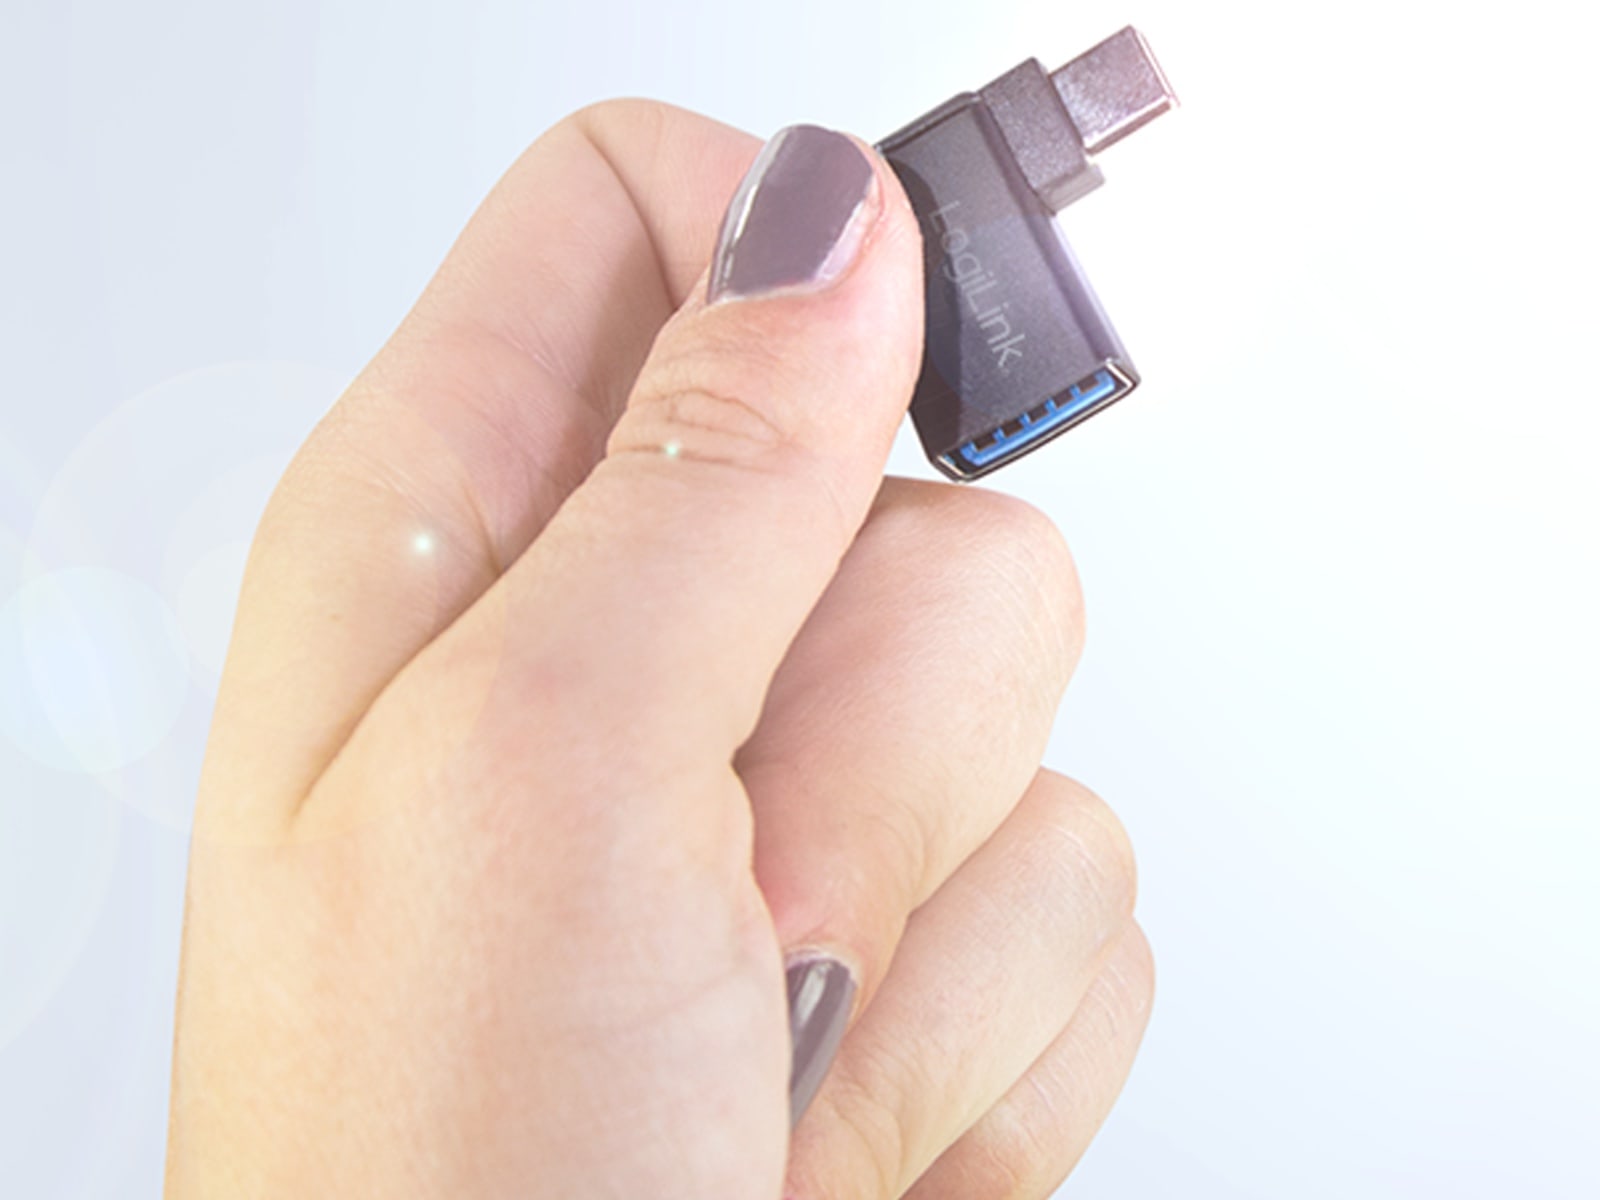 LOGILINK USB-Adapter AU0055, schwarz, USB-C auf USB-A, 90° gewinkelt